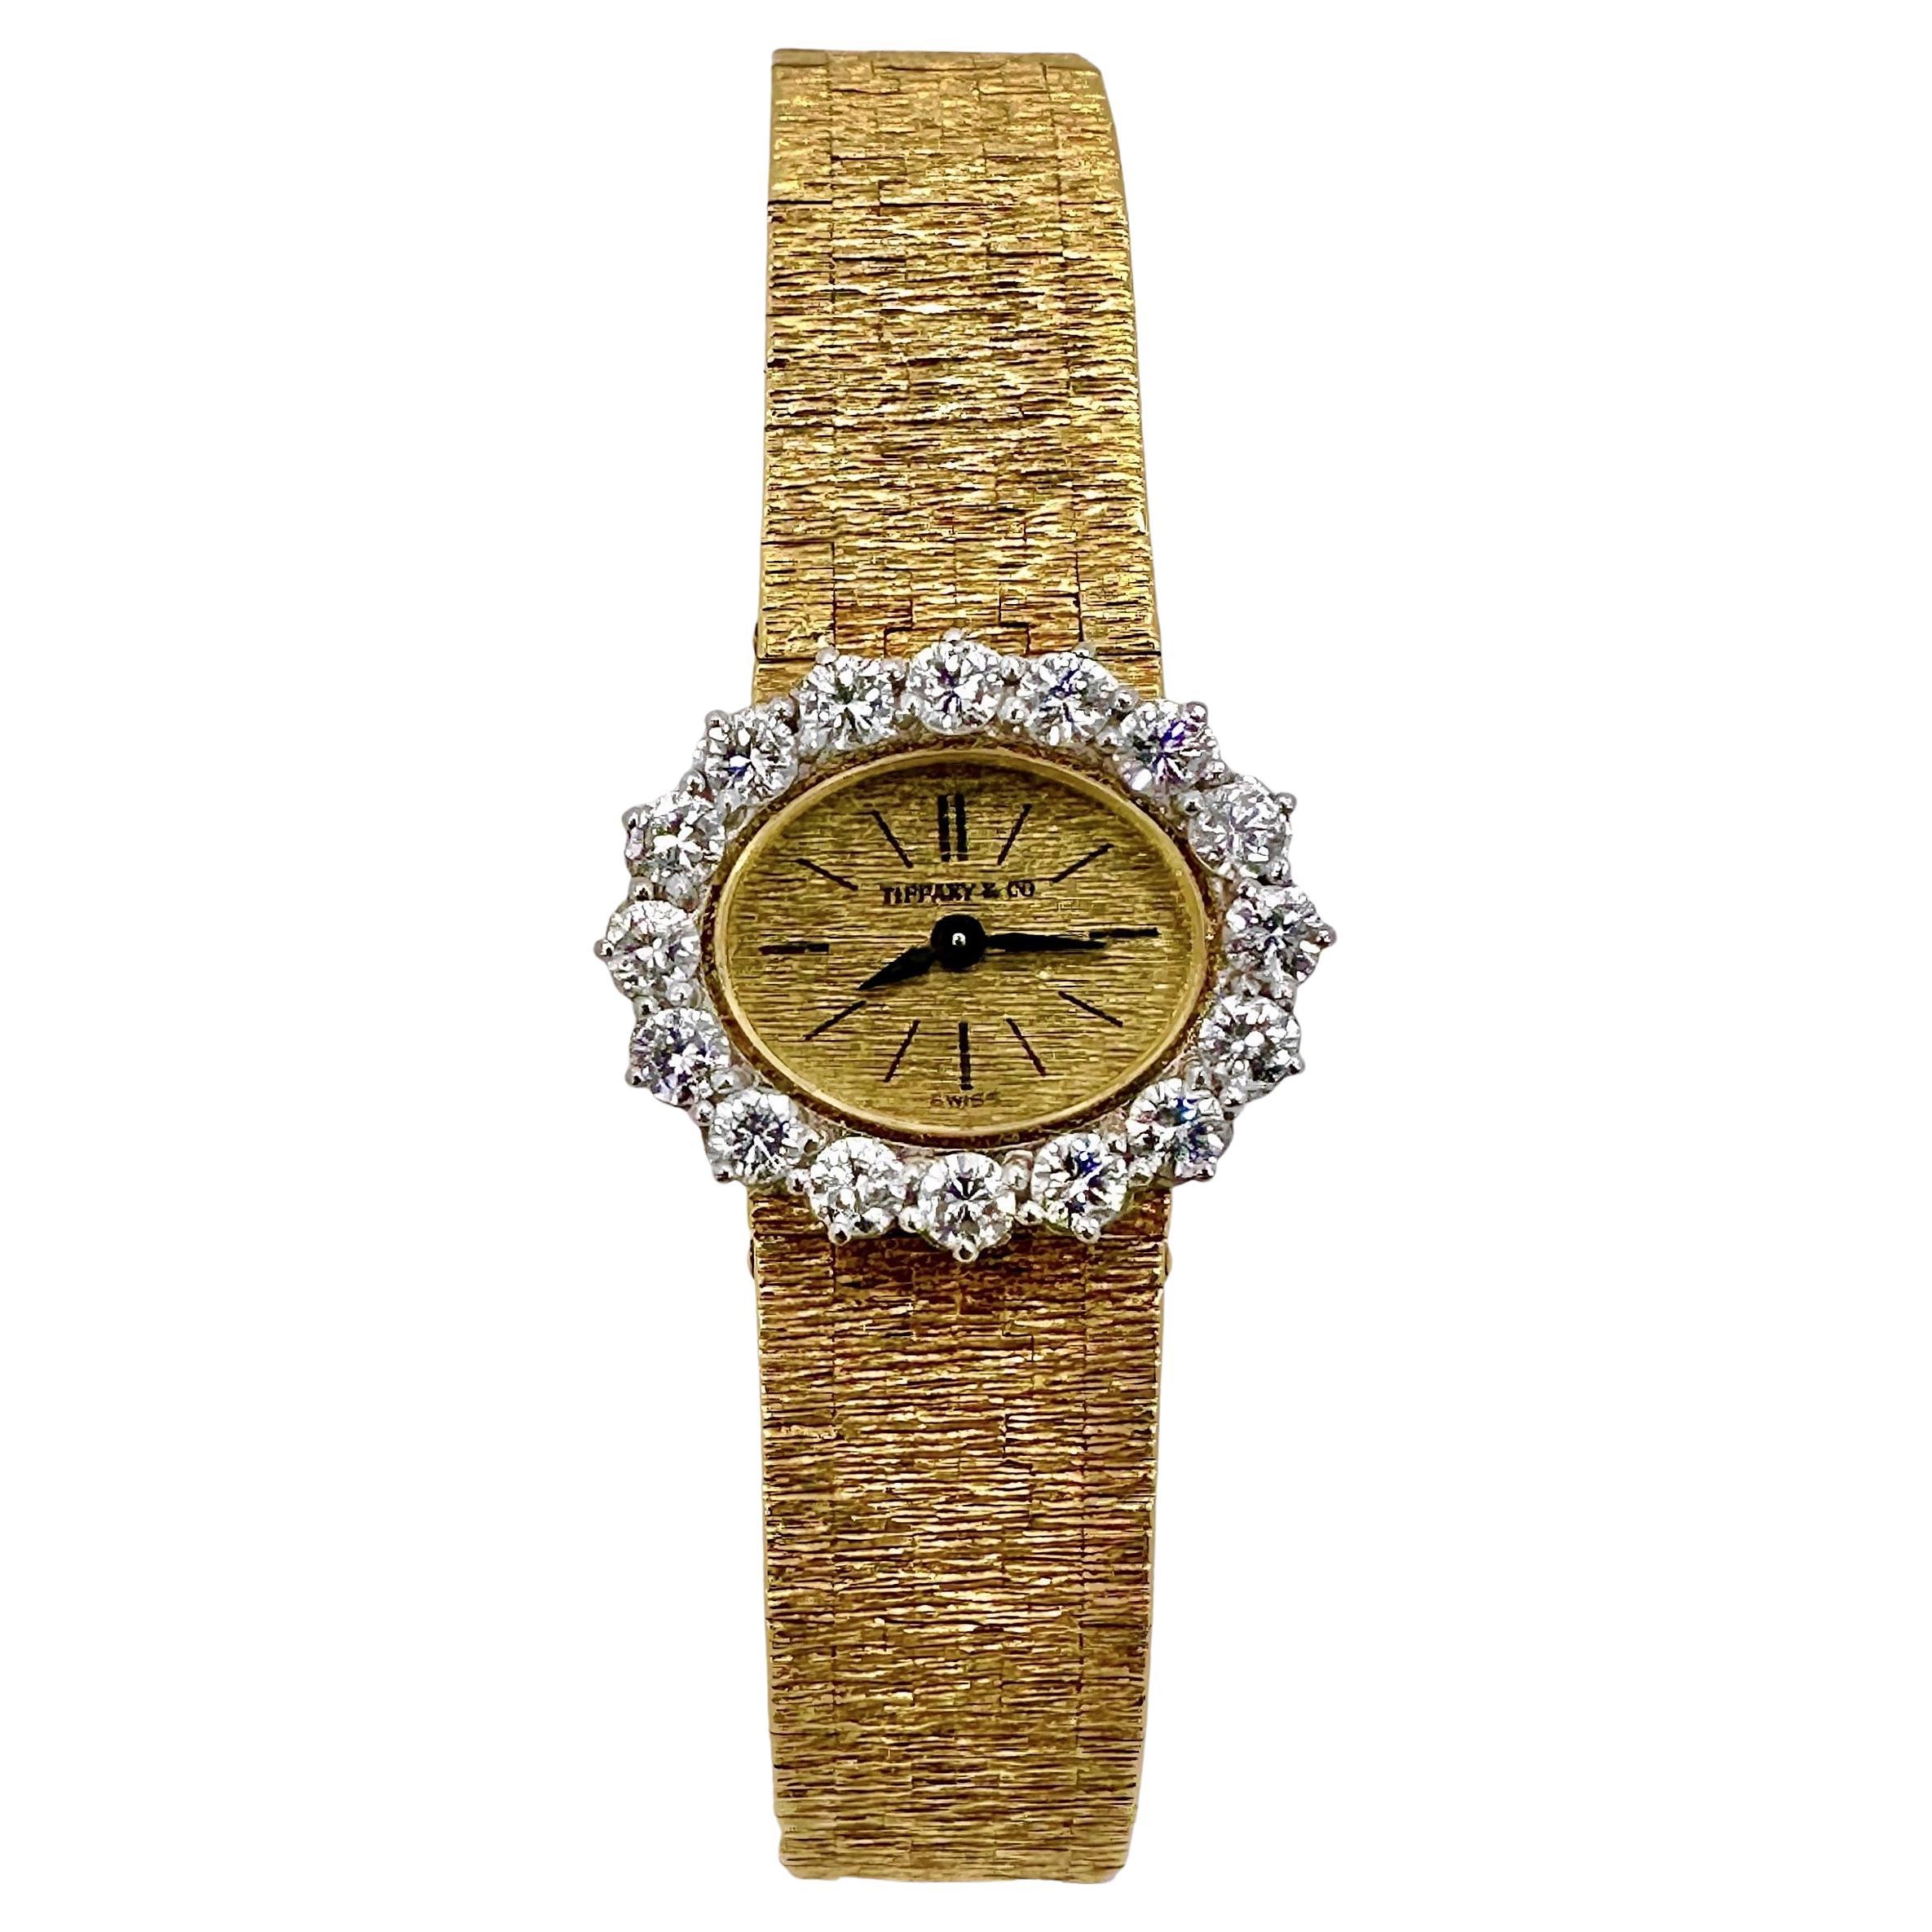 Vintage Ladies 18k Gold Tiffany & Co Wrist Watch with Diamond Bezel by Piaget